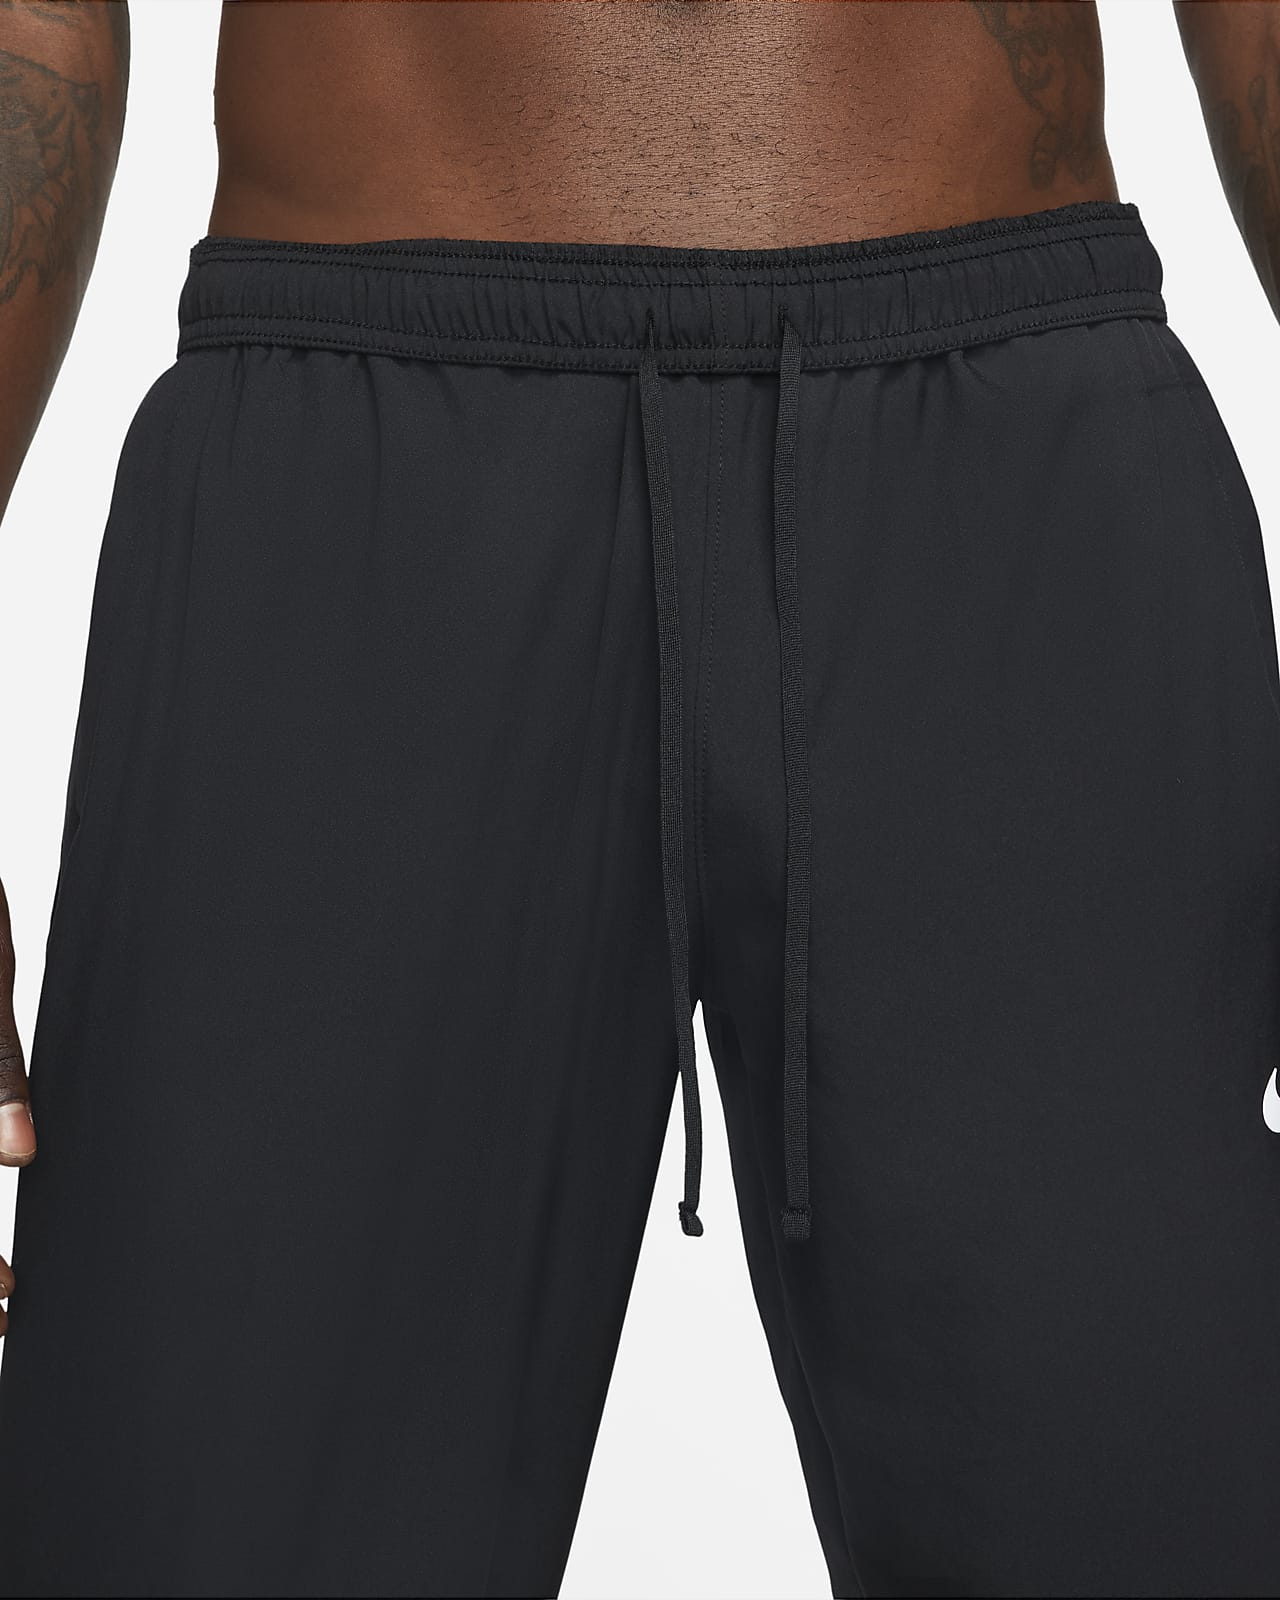 Nike Dri-FIT Challenger Men s Woven Running Pants